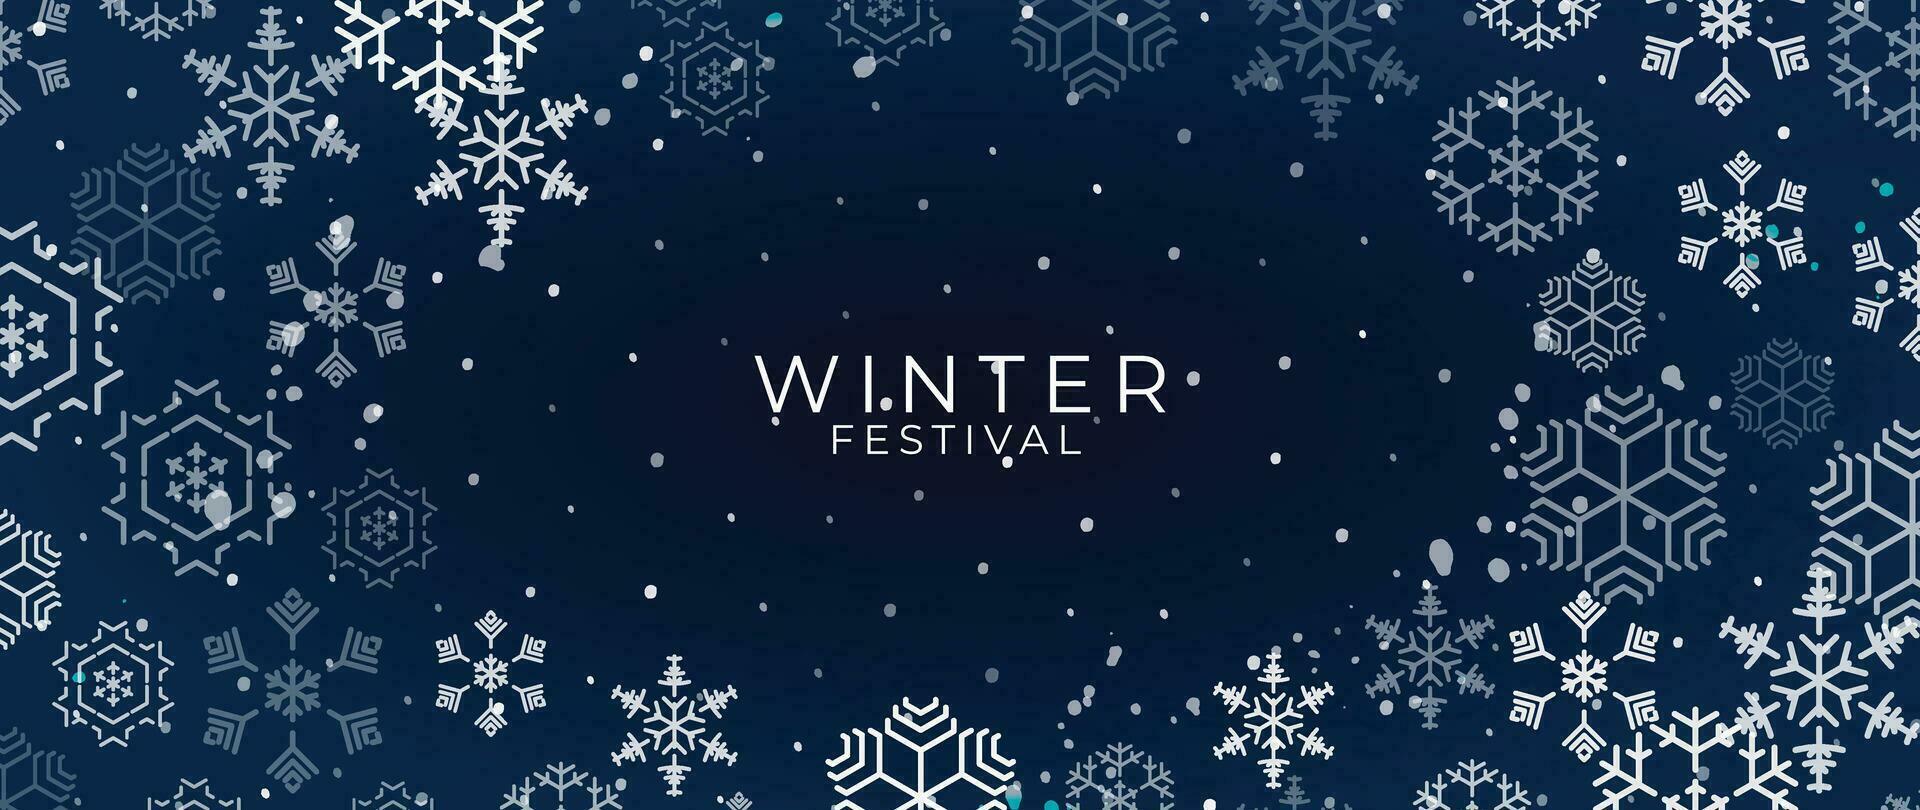 Winter festival seasonal background vector illustration. Christmas holiday event snowfall, snowflake, sky, night. Design for poster, wallpaper, banner, card, decoration.